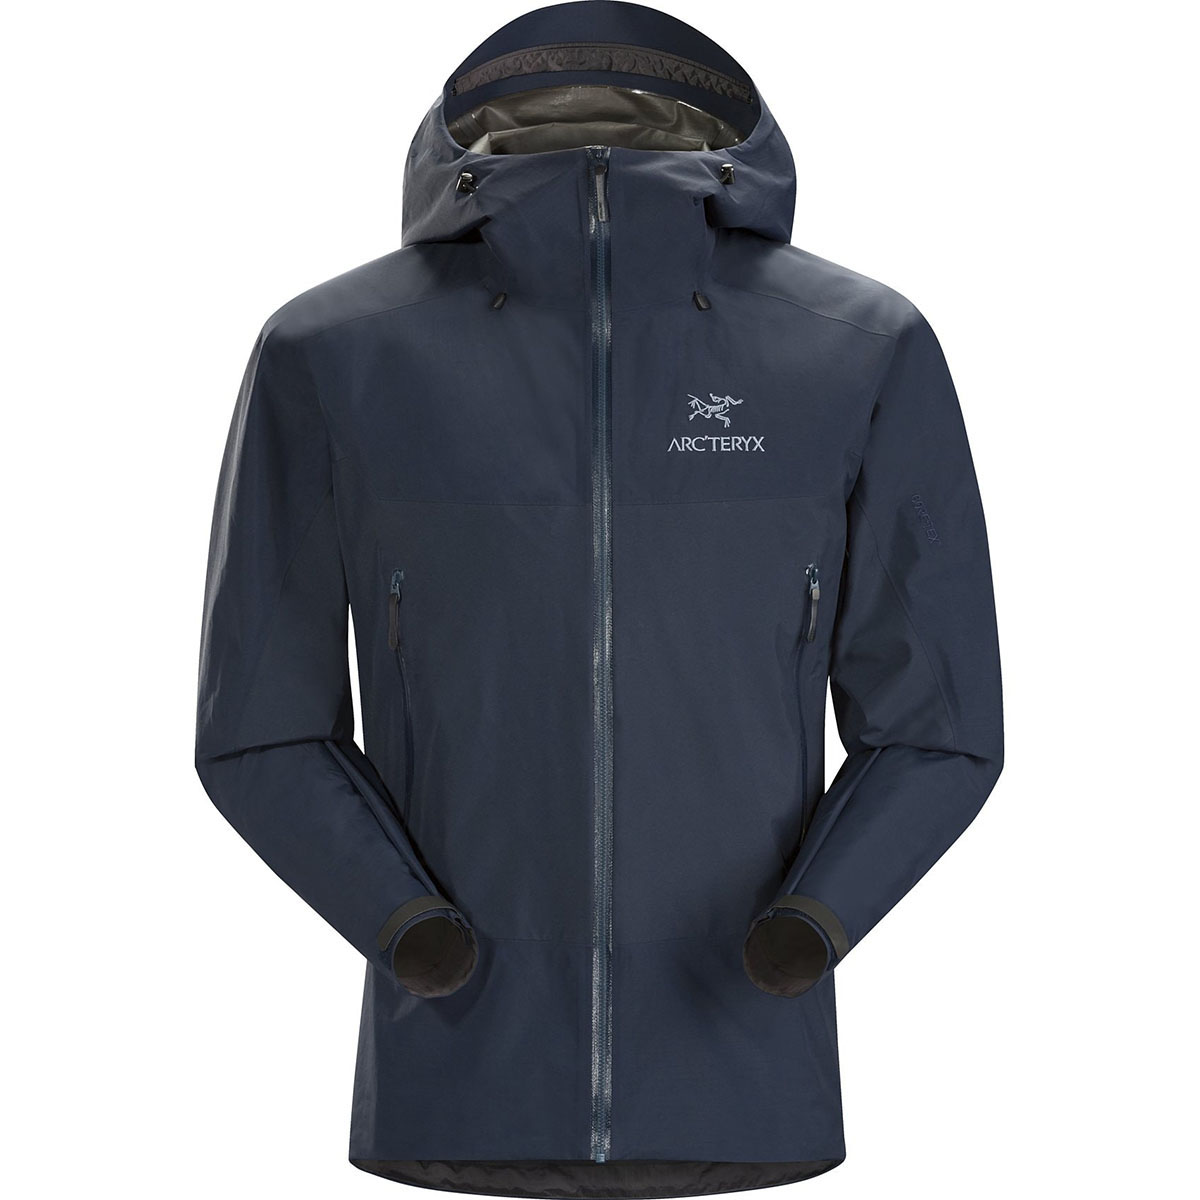 Beta SL Hybrid Jacket, men's, discontinued Fall 2019 colors